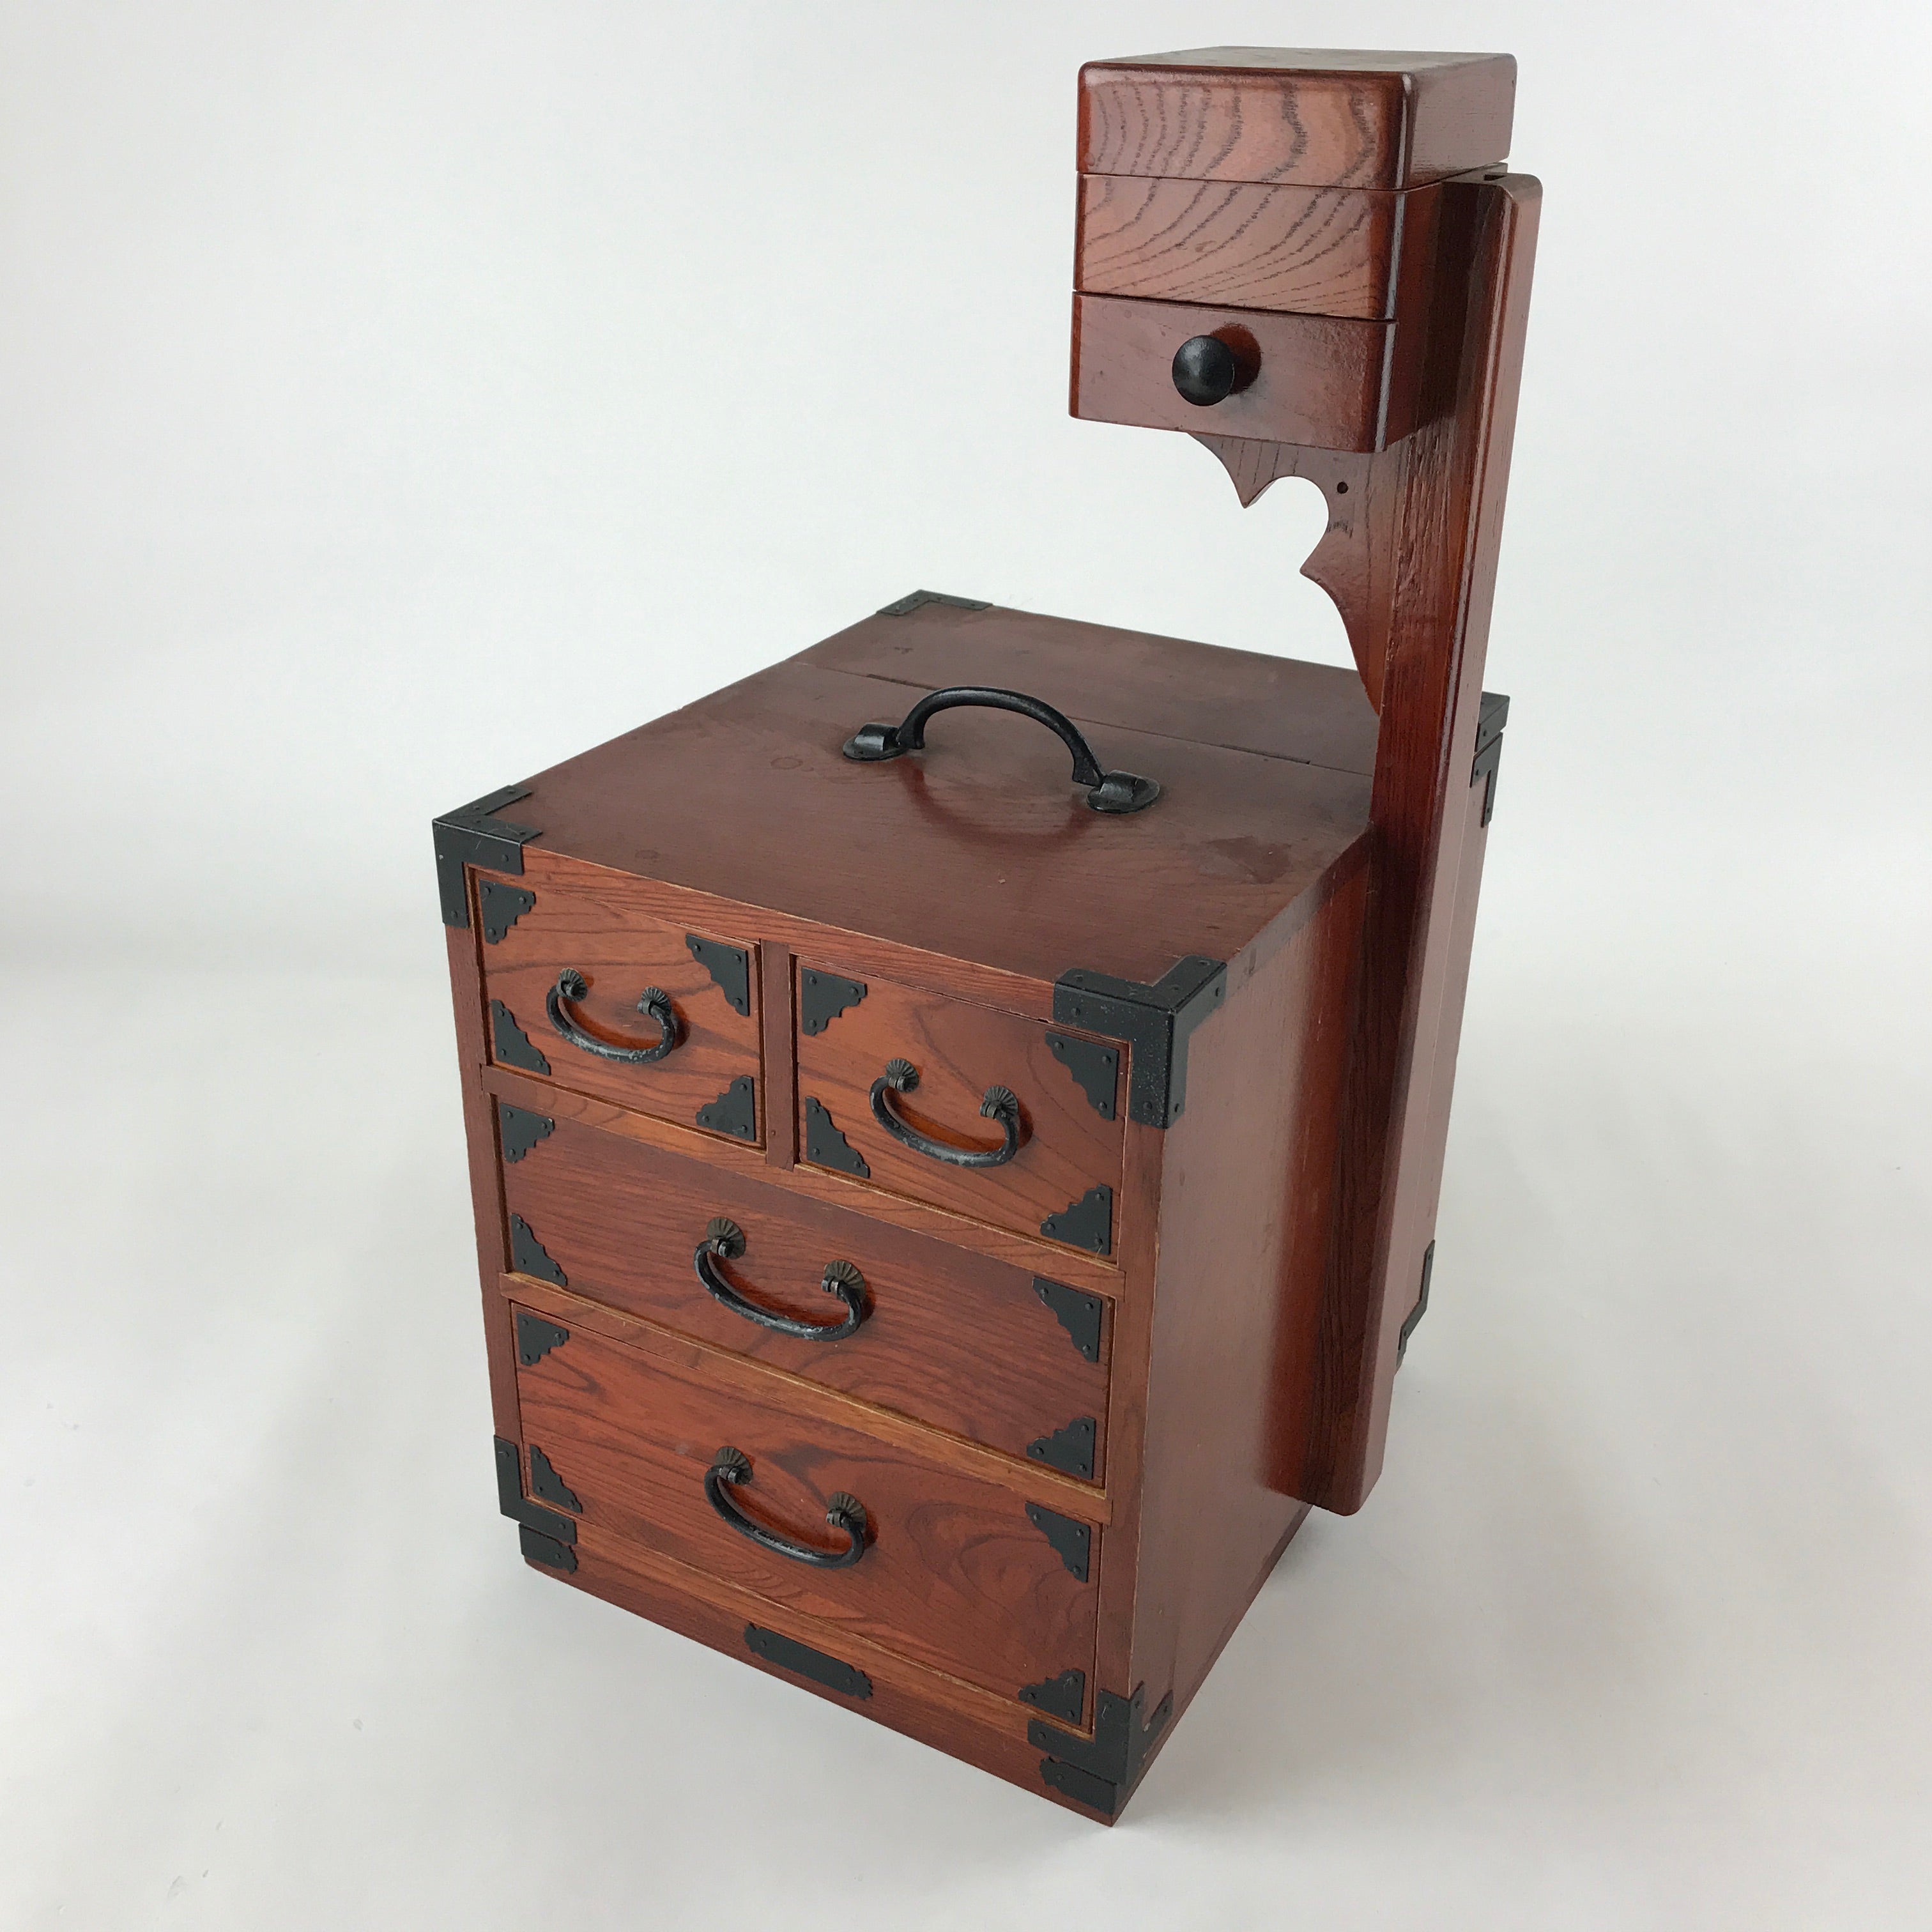 Japanese Wooden Sewing Box Haribako Vtg Tansu Chest 5 Drawers Pin Stan, Online Shop